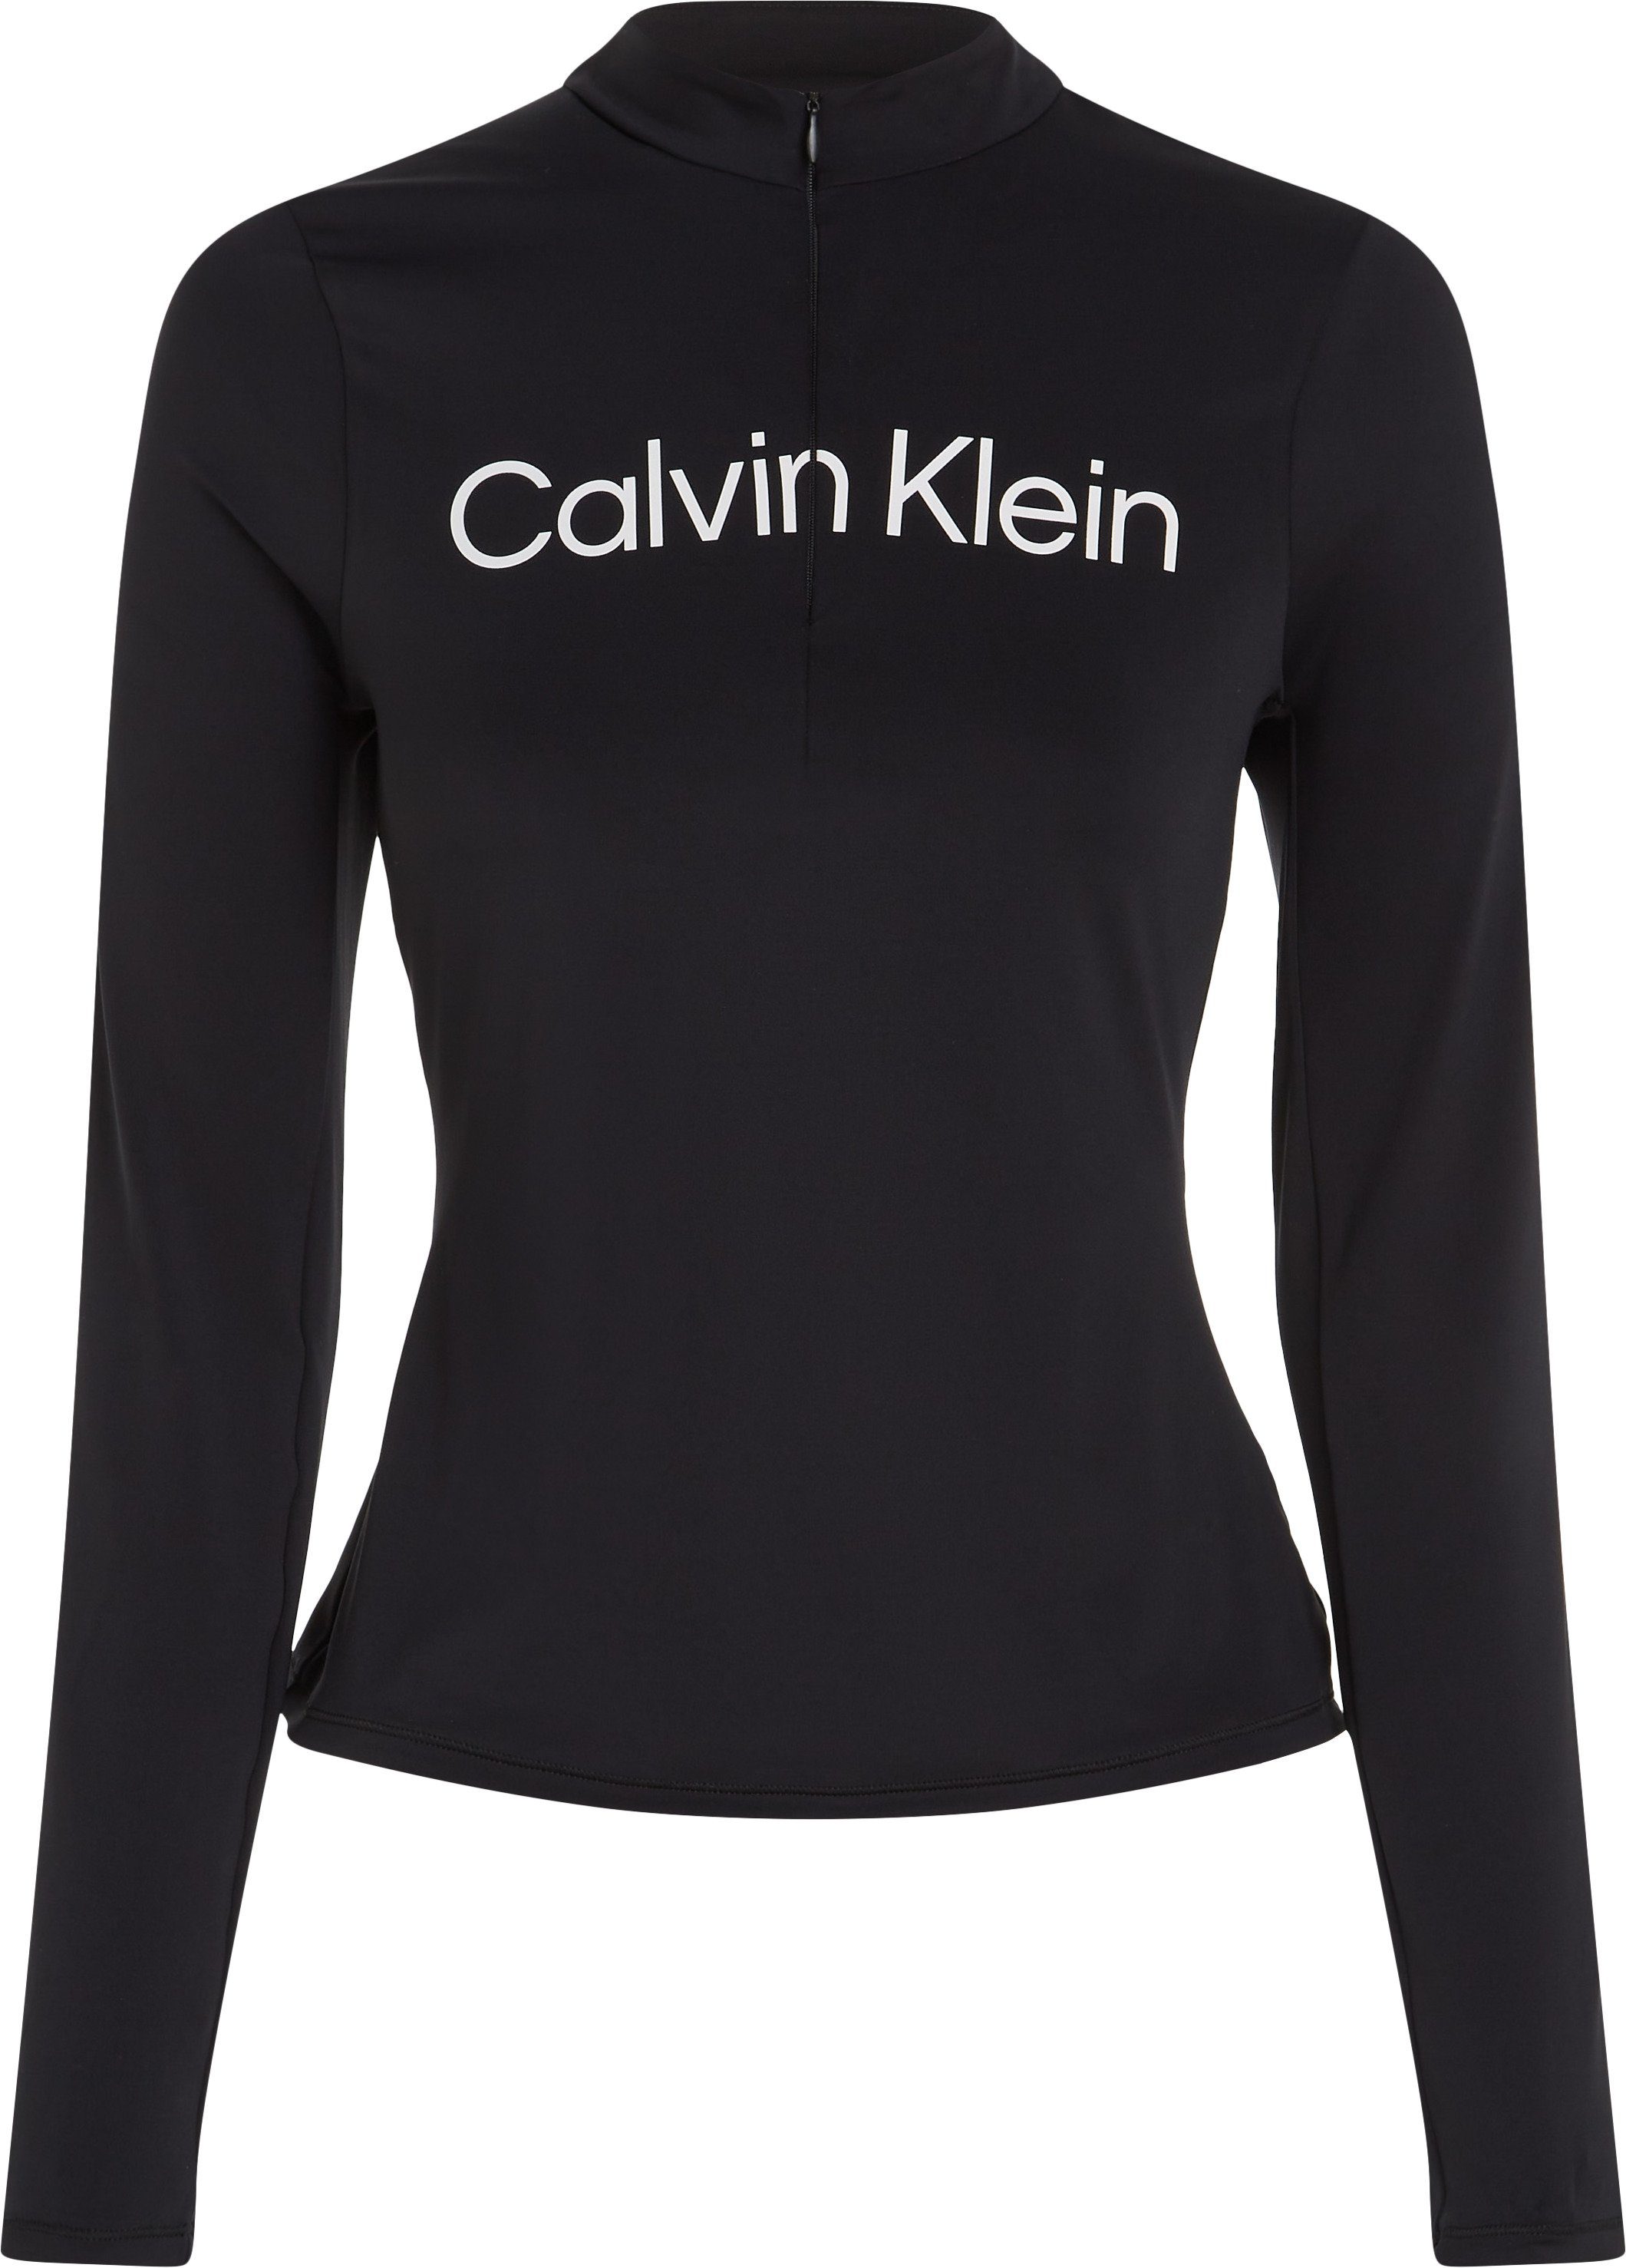 LS - Top WO Calvin Sport Klein Langarmshirt